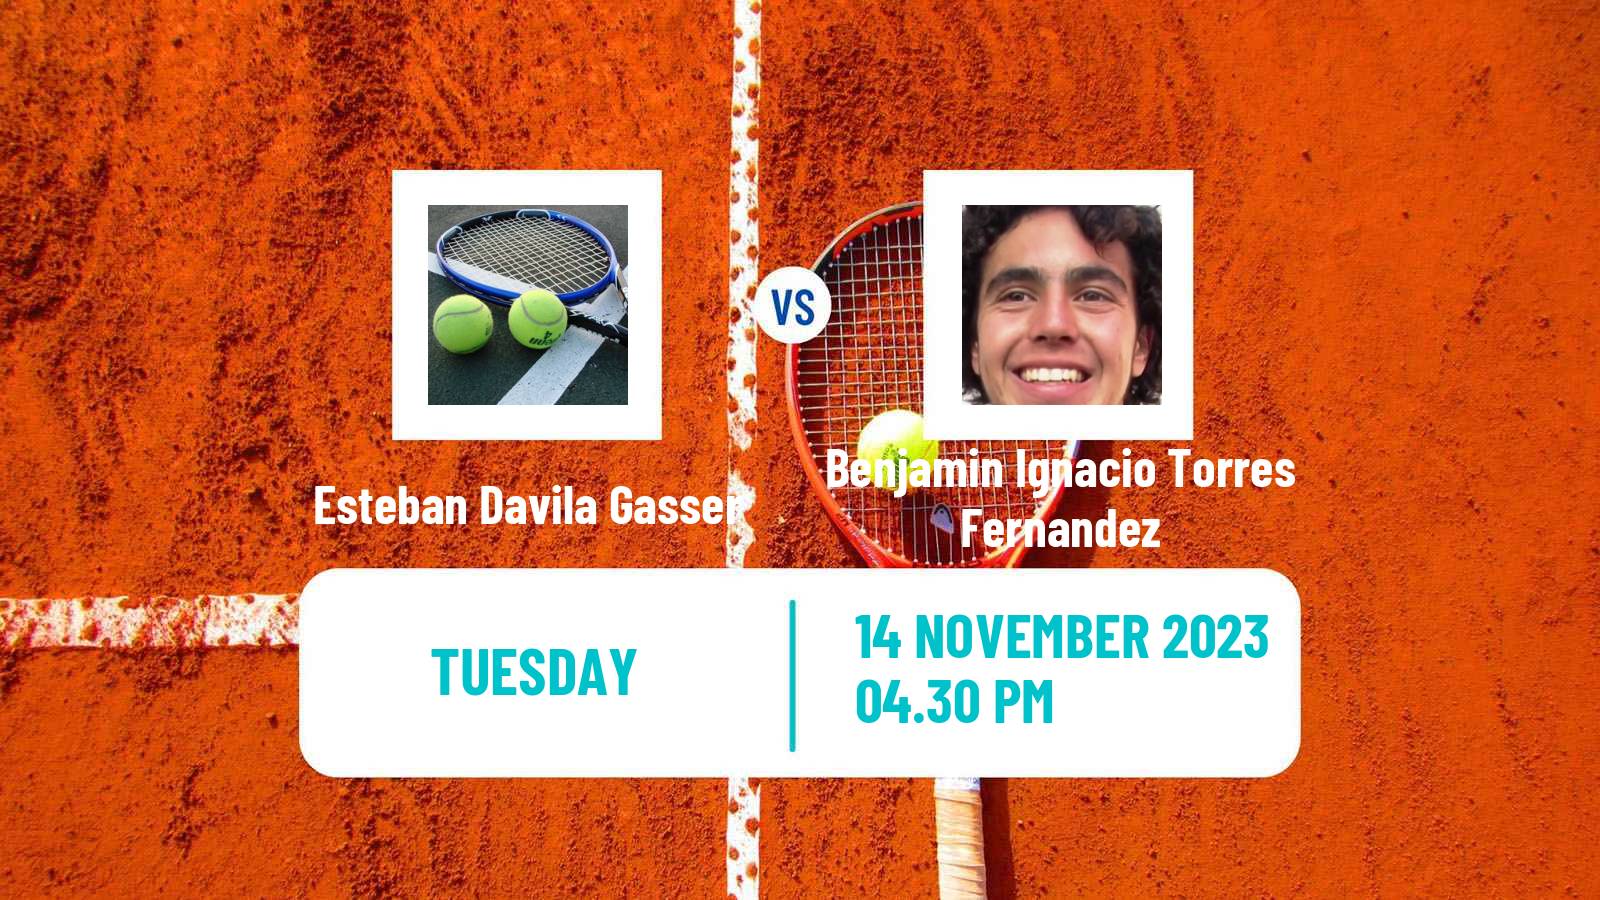 Tennis ITF M15 Cochabamba Men Esteban Davila Gasser - Benjamin Ignacio Torres Fernandez